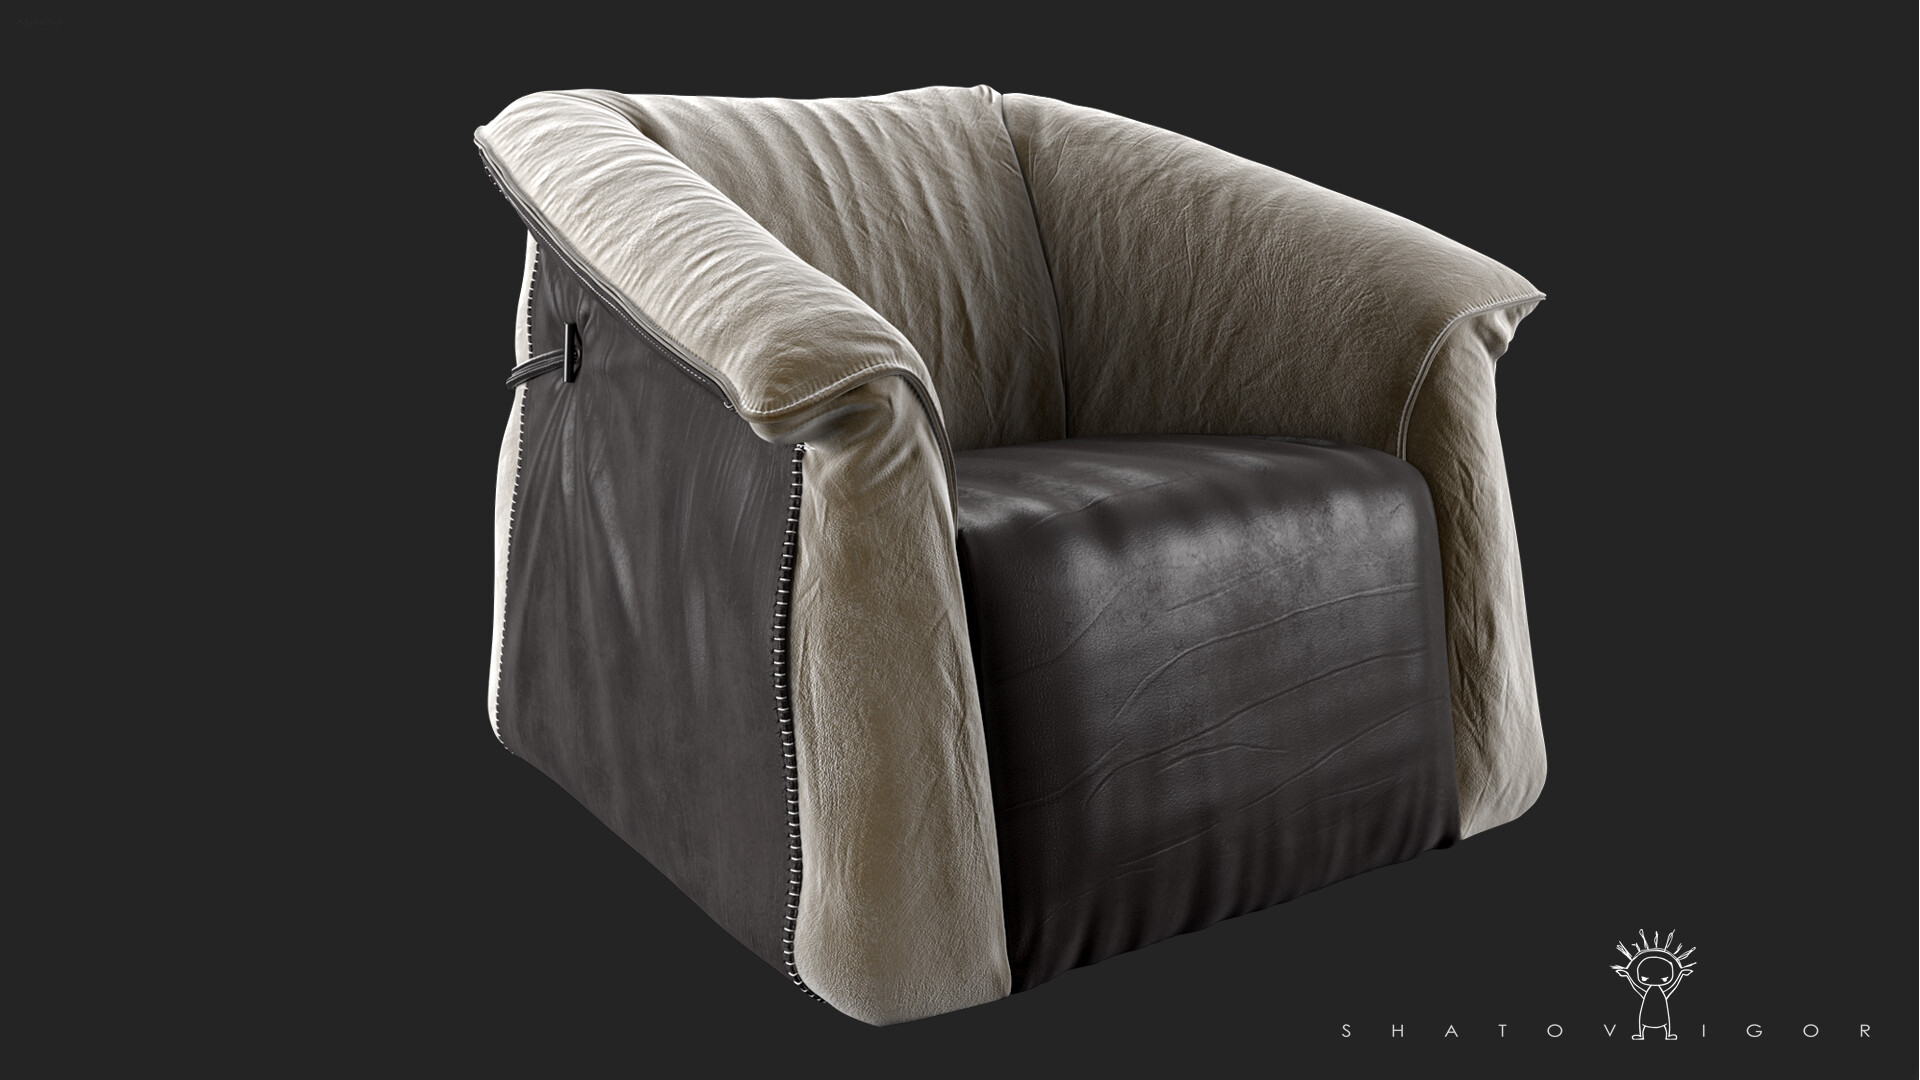 ArtStation - Modeling armchair